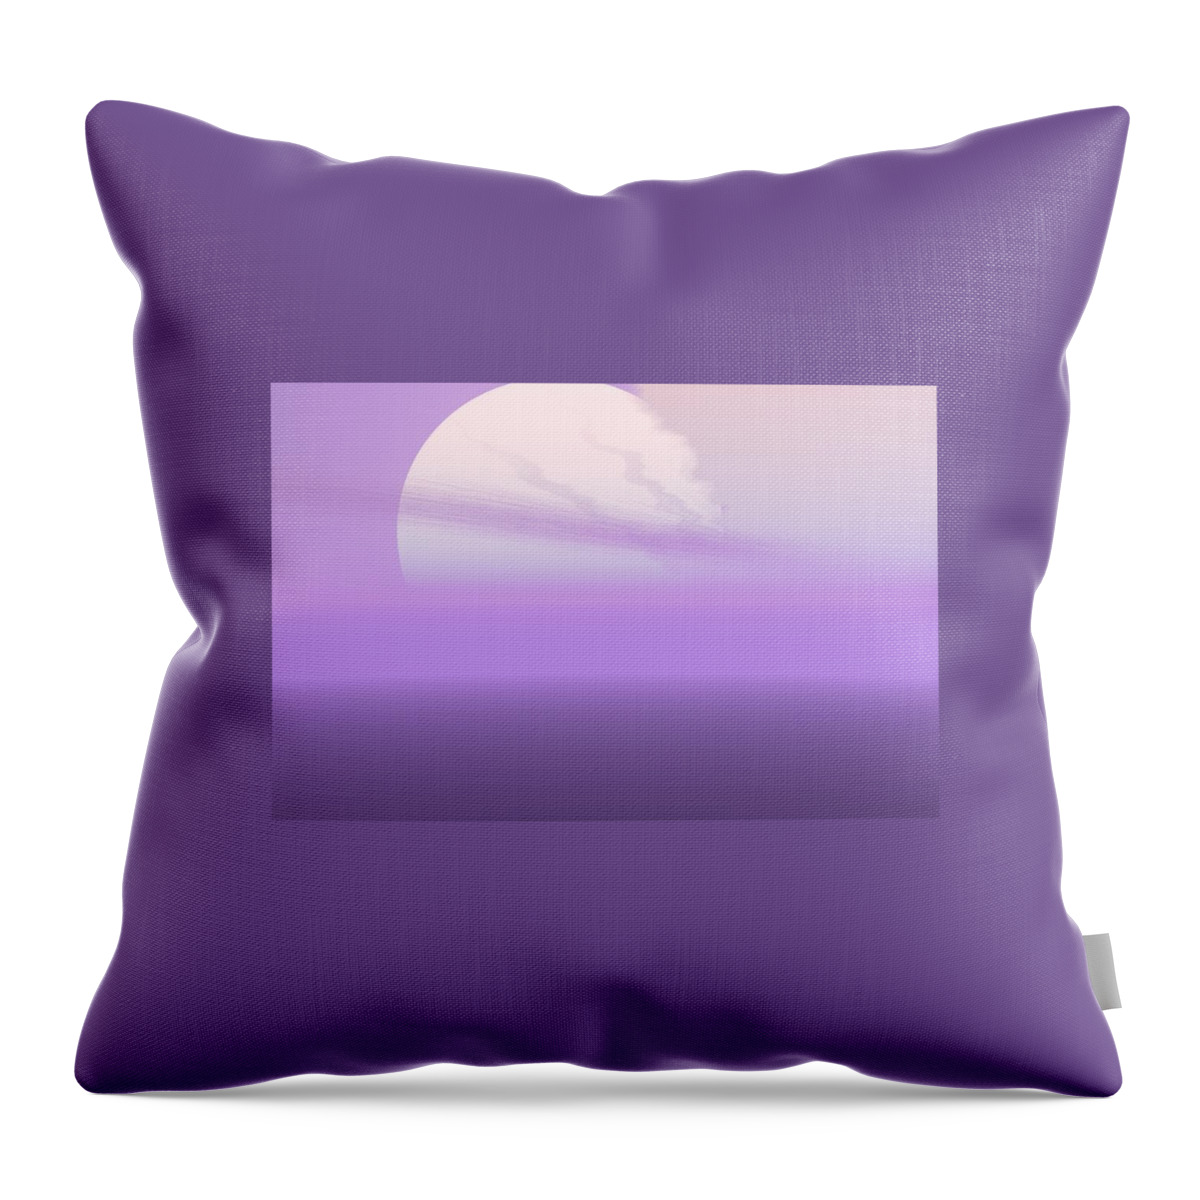 Lavender Color Throw Pillow featuring the digital art Lavender Sun by Sarah McKoy